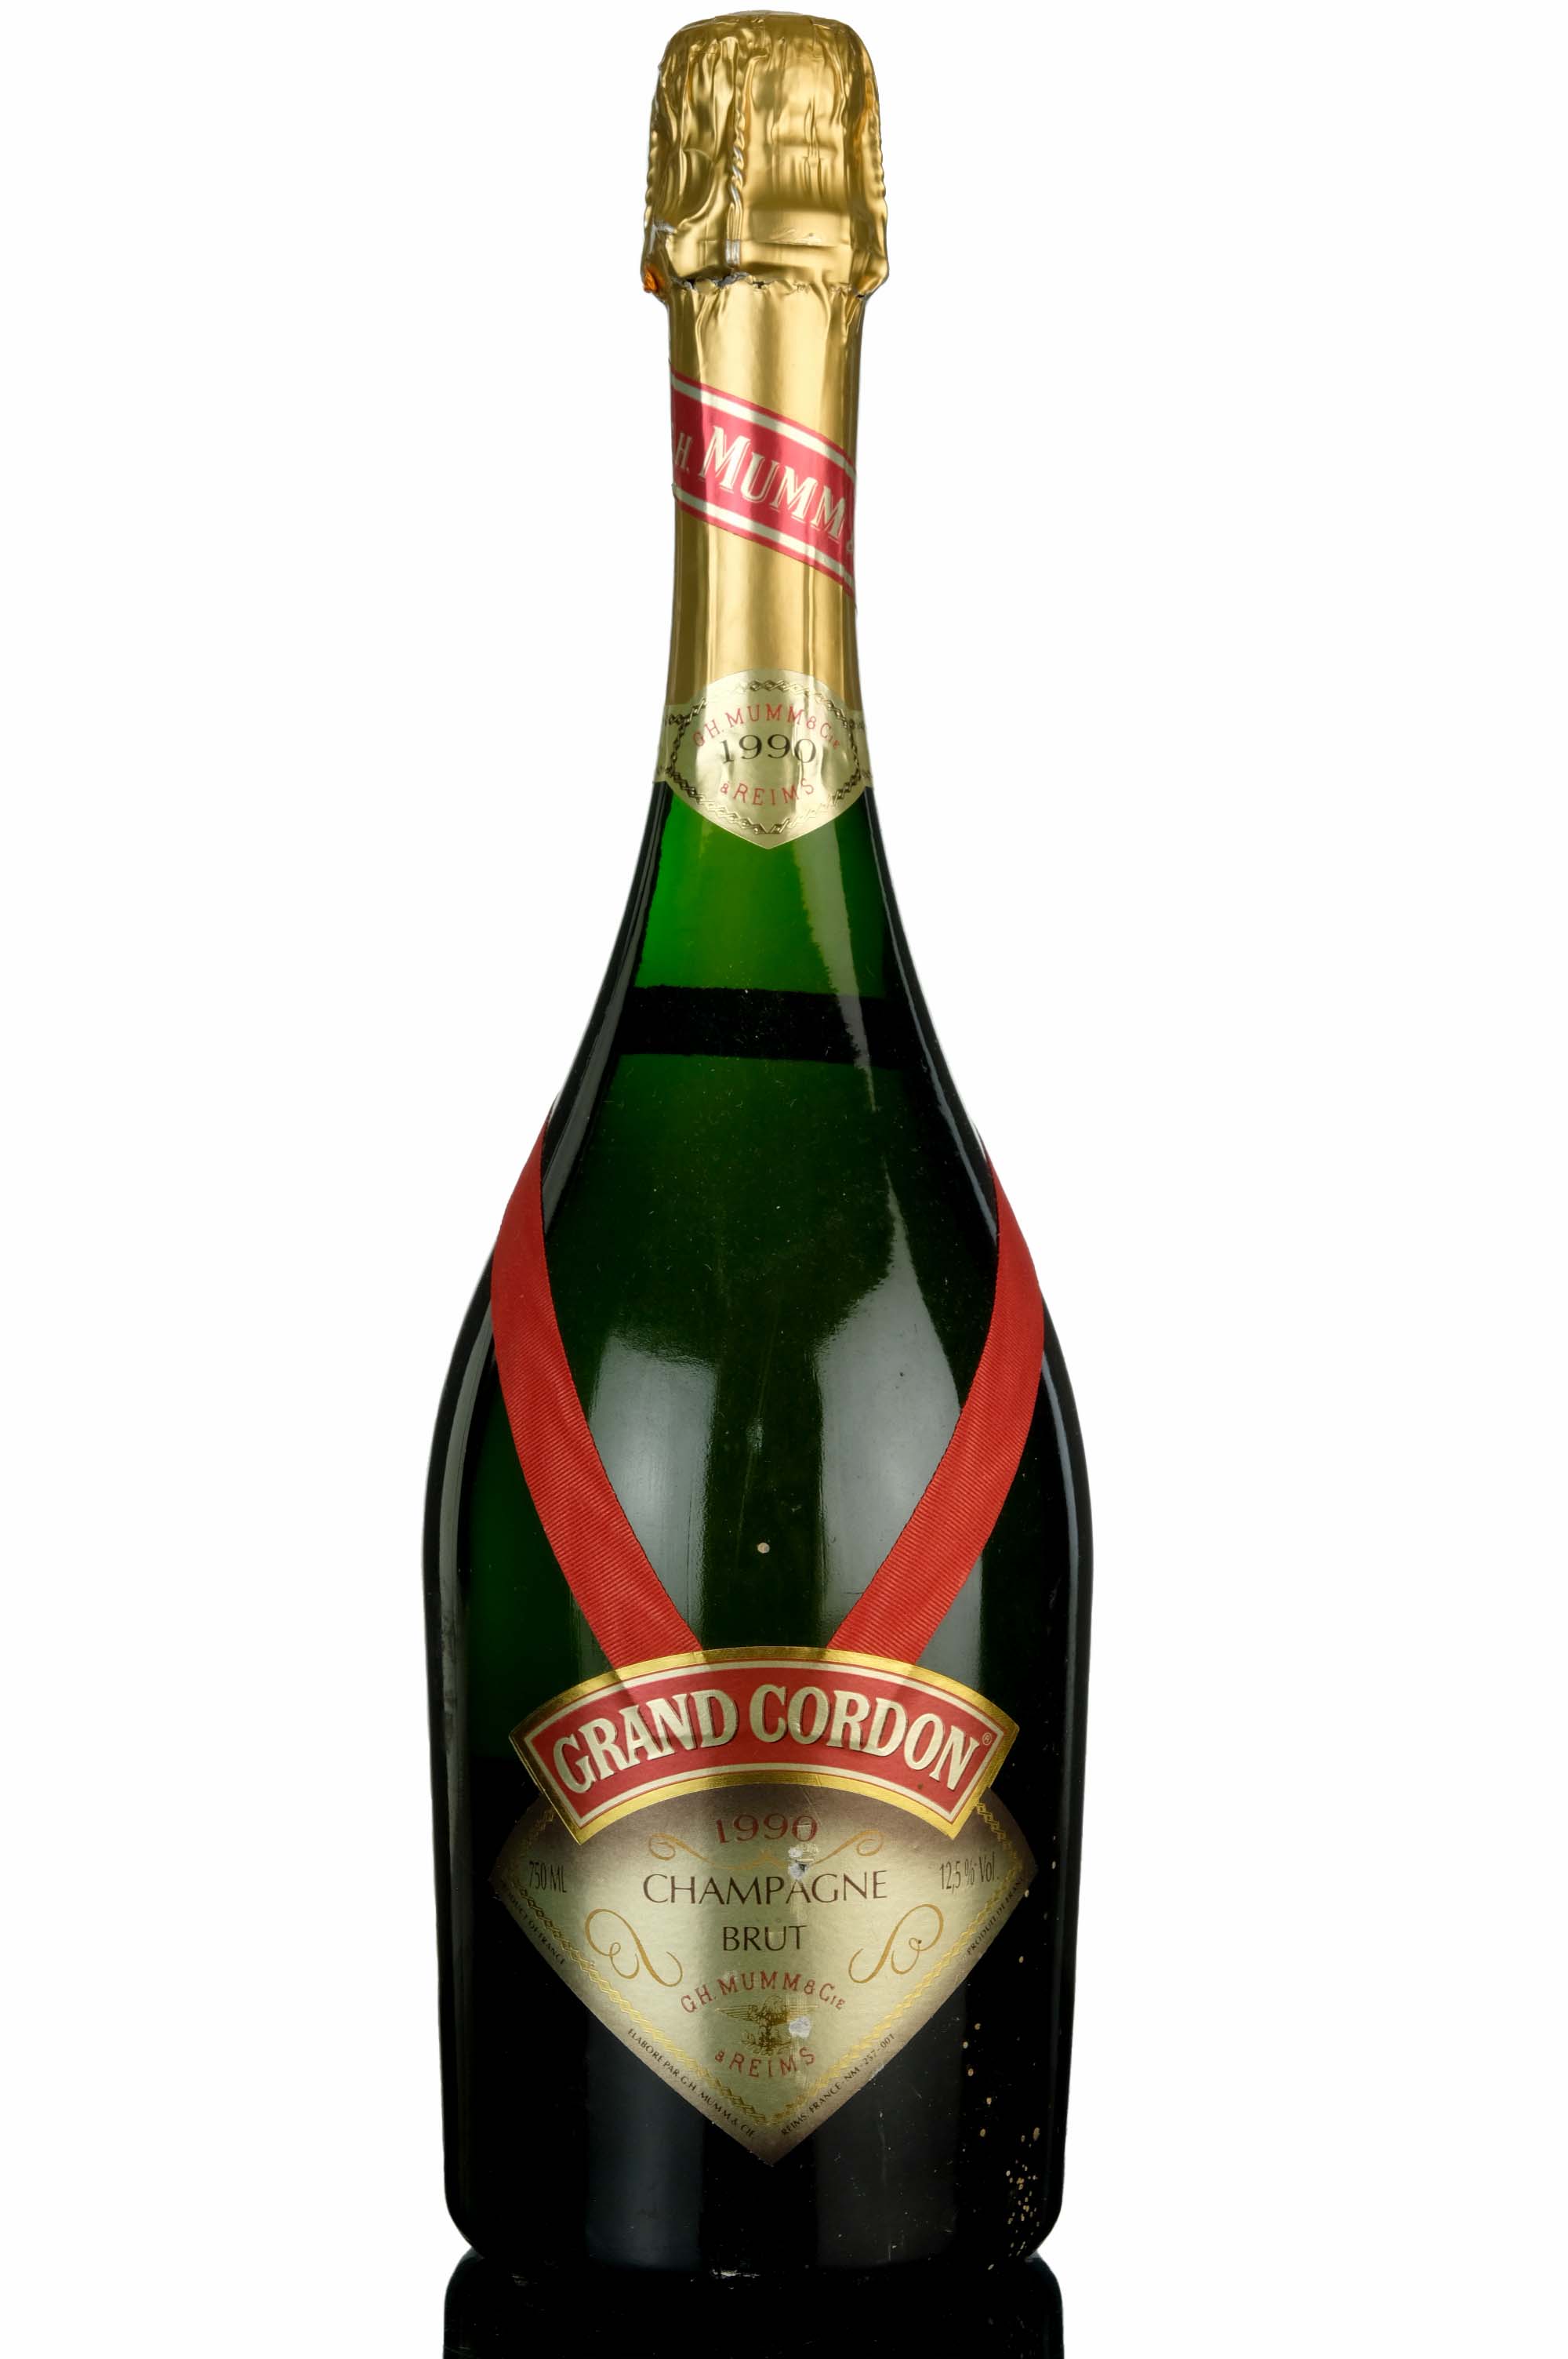 G.H. Mumm Grand Cordon 1990 Champagne